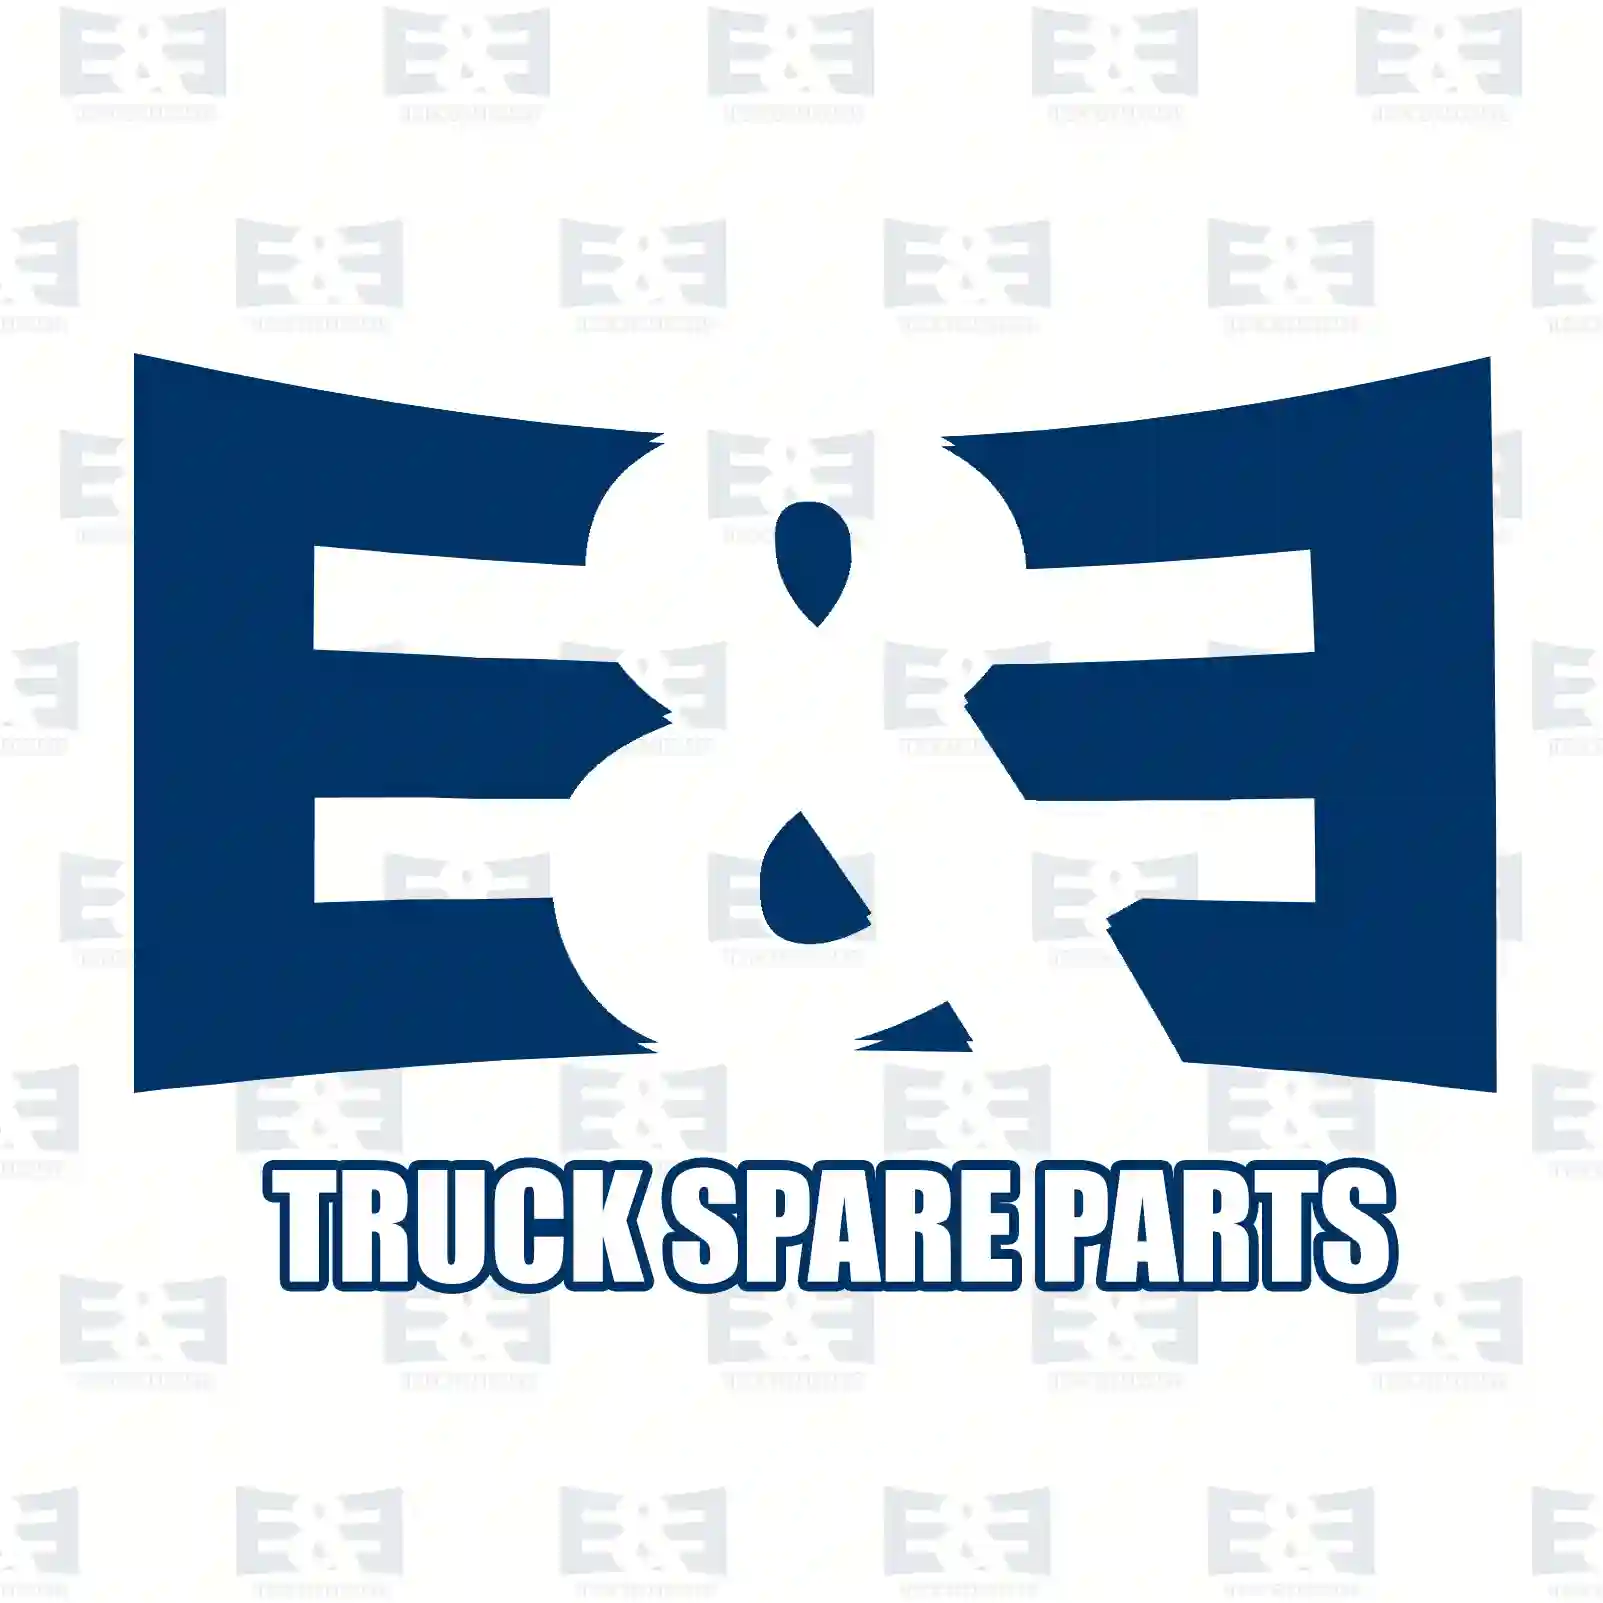 Standard Parts Bolt with nut, EE No 2E2285990 ,  oem no:06014990167, 06017390021, 81900010174, 81900010175, 81900010184, 81900010218, 81900010247, 81904900263, 85300010736, 0029909901, 3959900001, 3959900501 E&E Truck Spare Parts | Truck Spare Parts, Auotomotive Spare Parts